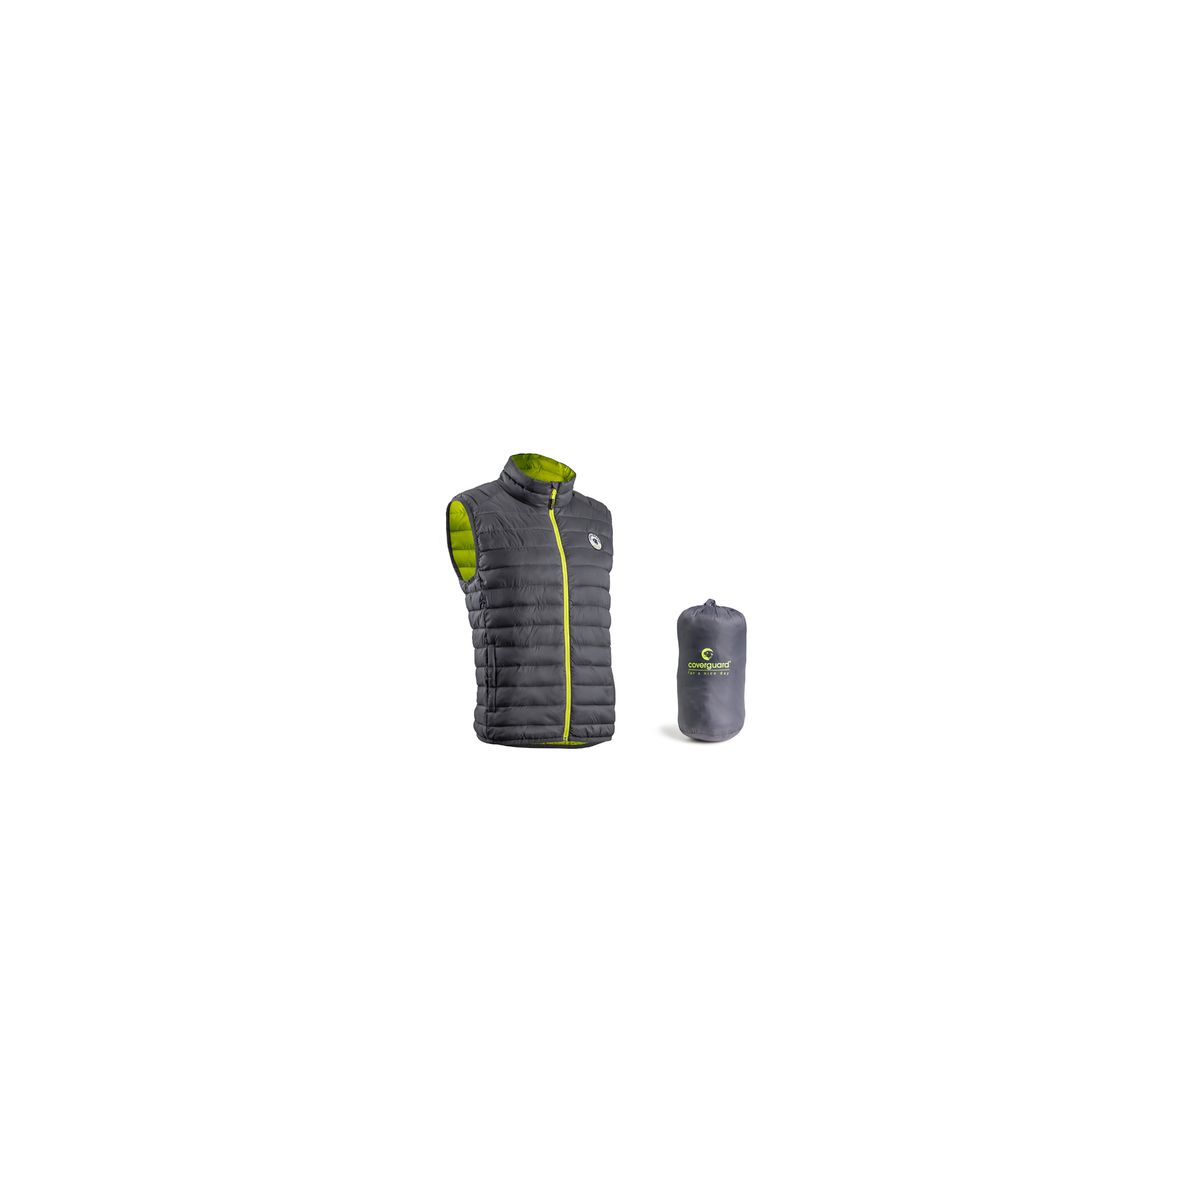 KUMA Gilet Froid gris/jaune, 100%PA + Matelassage 100g/m² - Coverguard - Taille 2XL 0